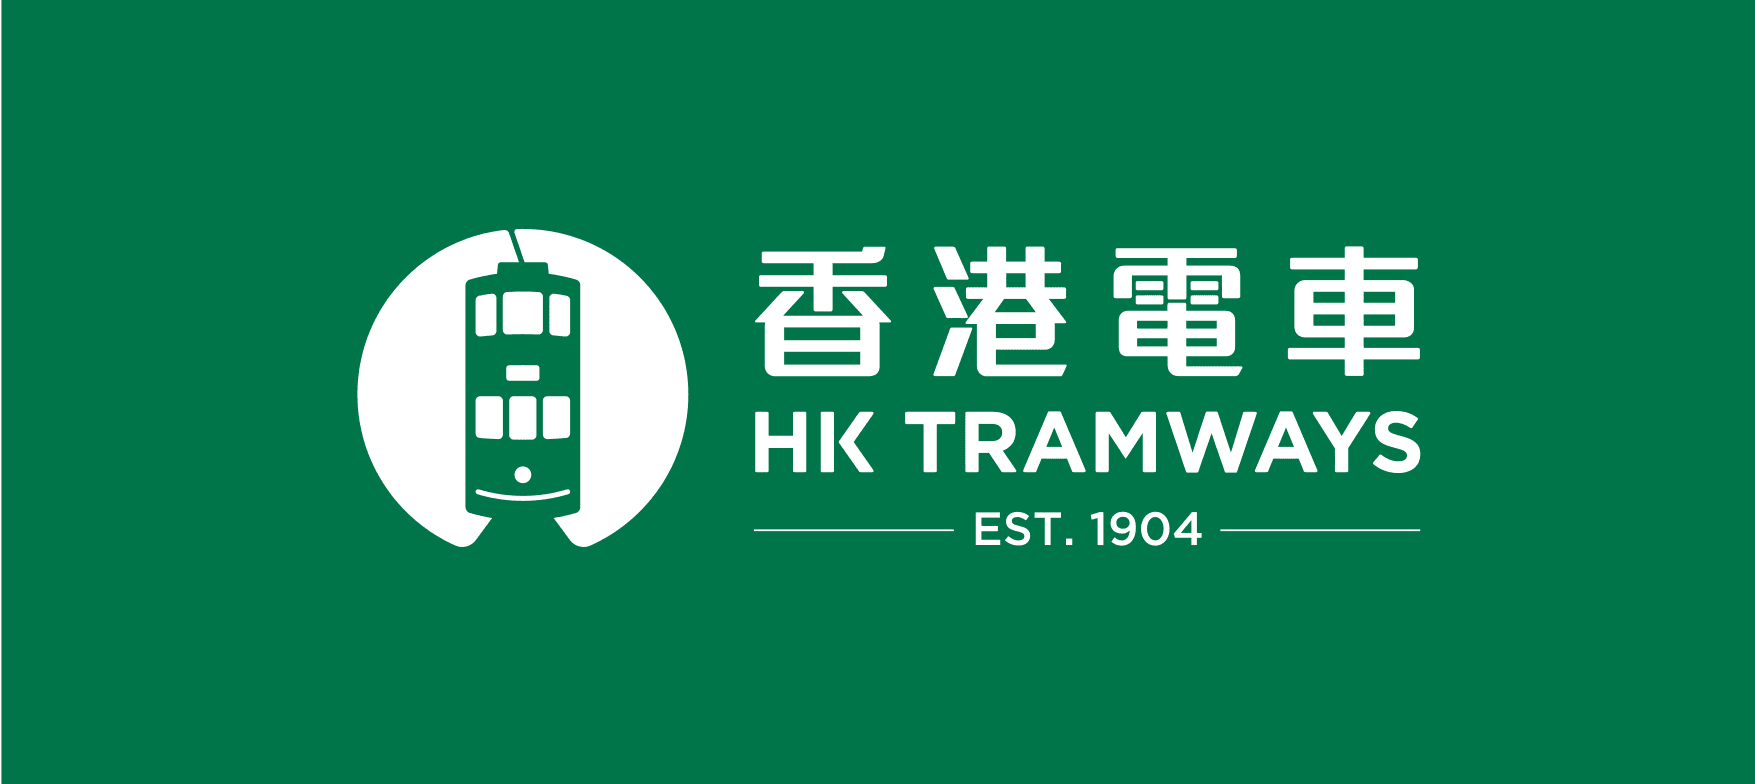 HK_Tramways 橫幅